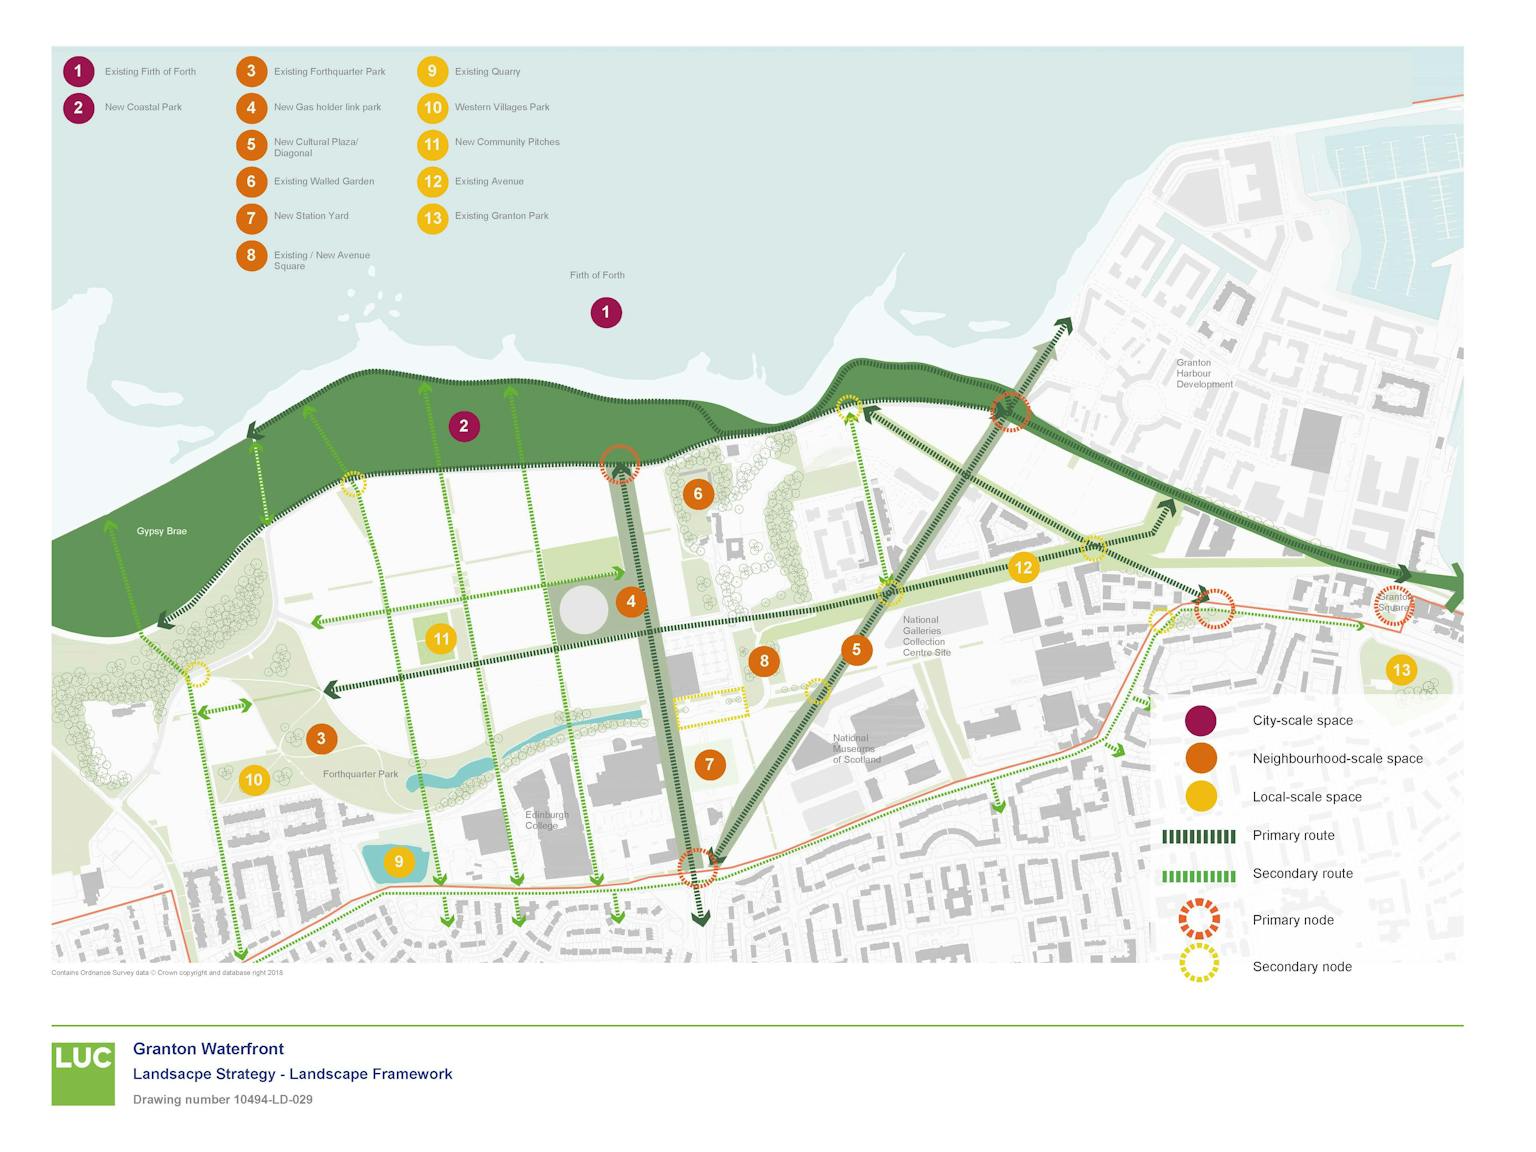 Landscape Strategy map showing Granton Waterfront